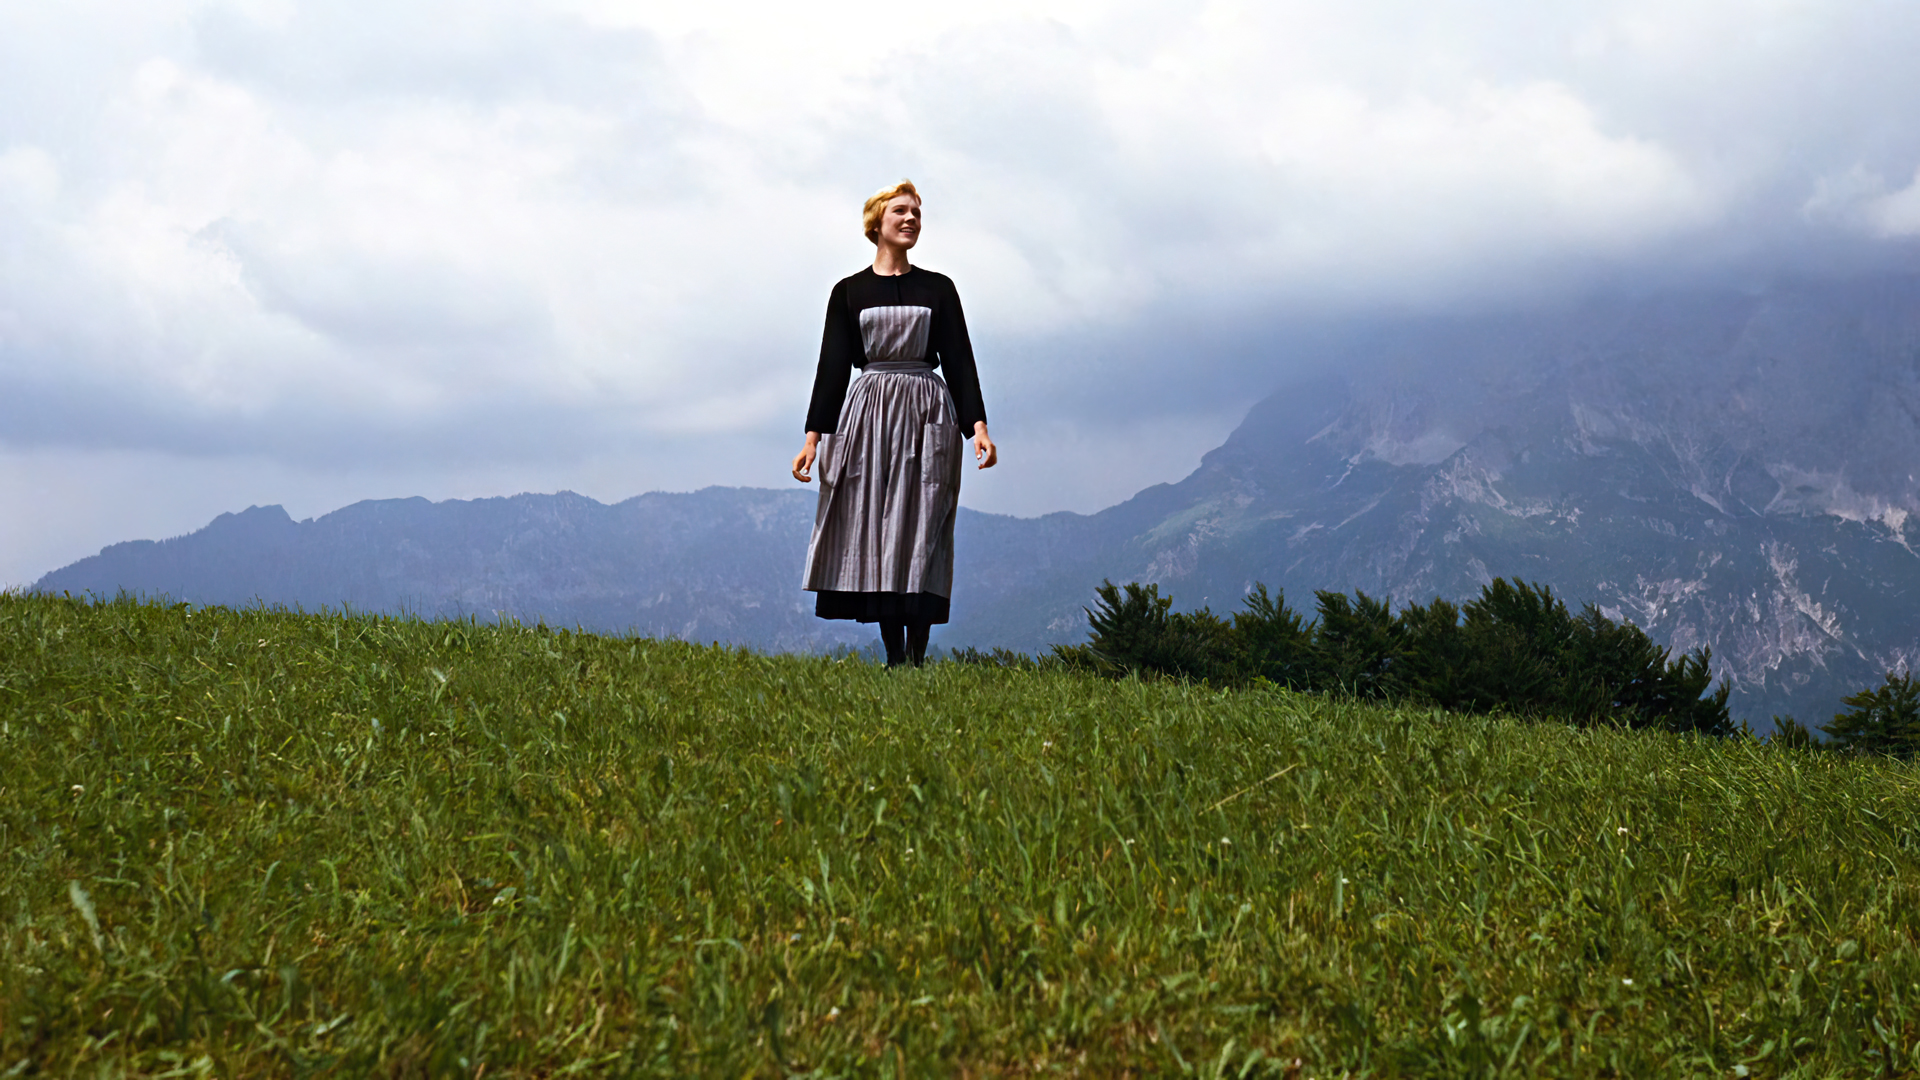 The Sound Of Music Movies Film Stills Julie Andrews Actress Mountains Field Hills Clouds Women 1920x1080